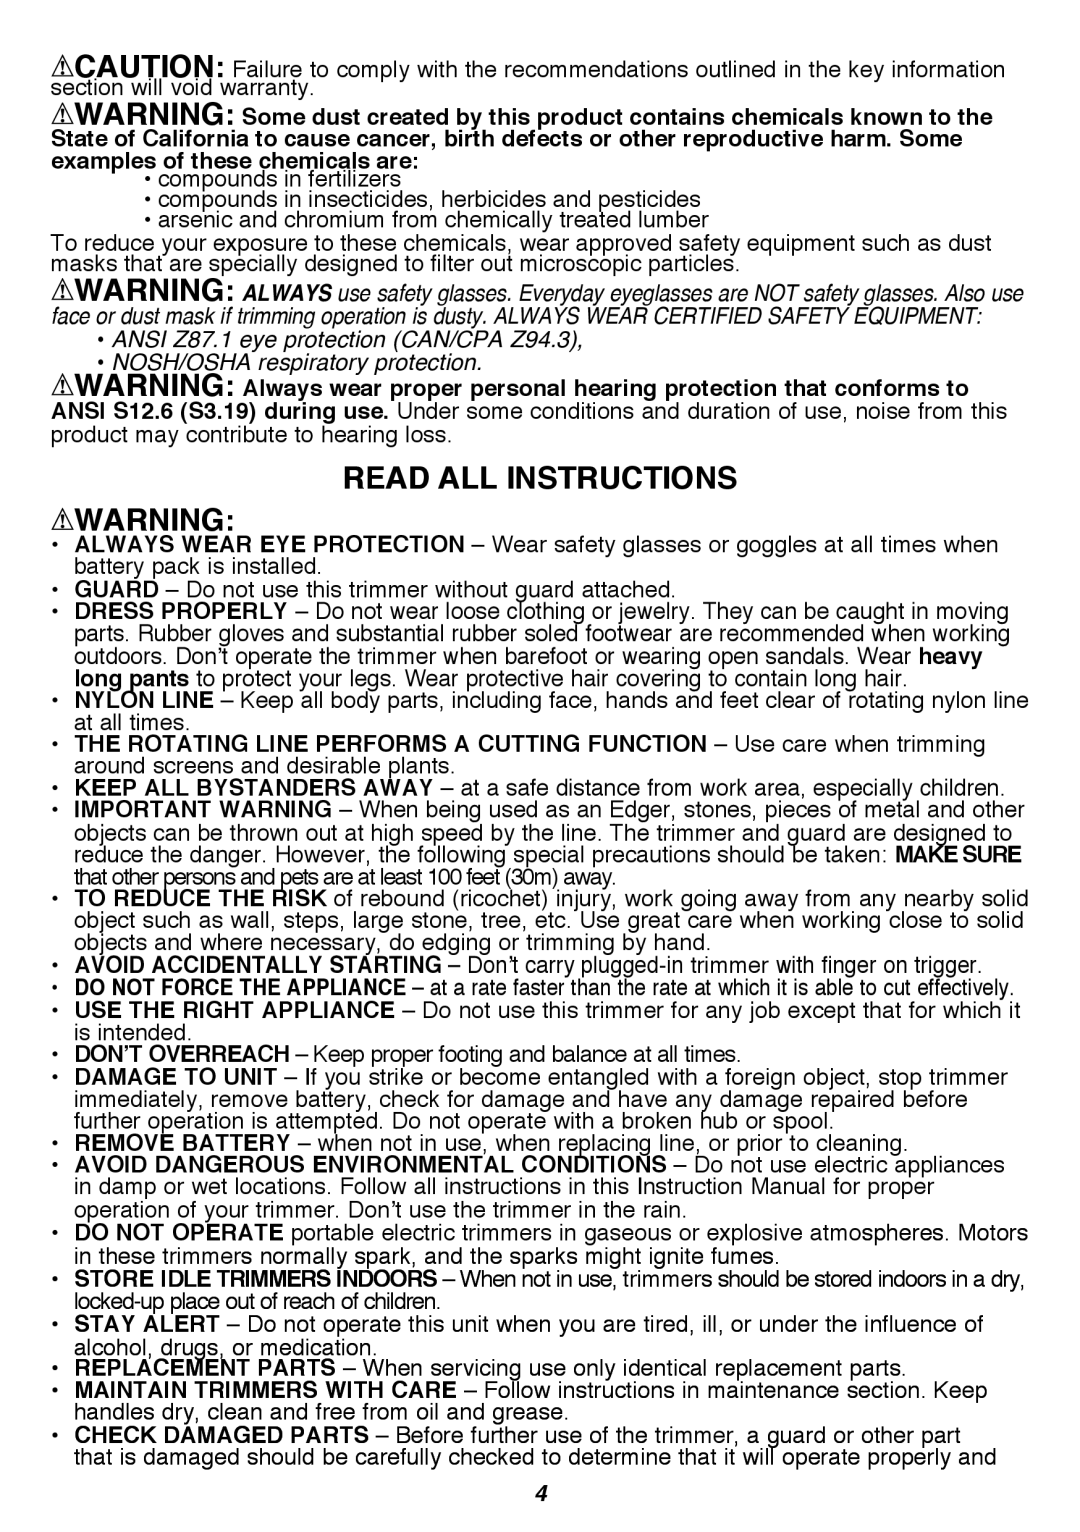 Black & Decker LST420 instruction manual Read All Instructions 